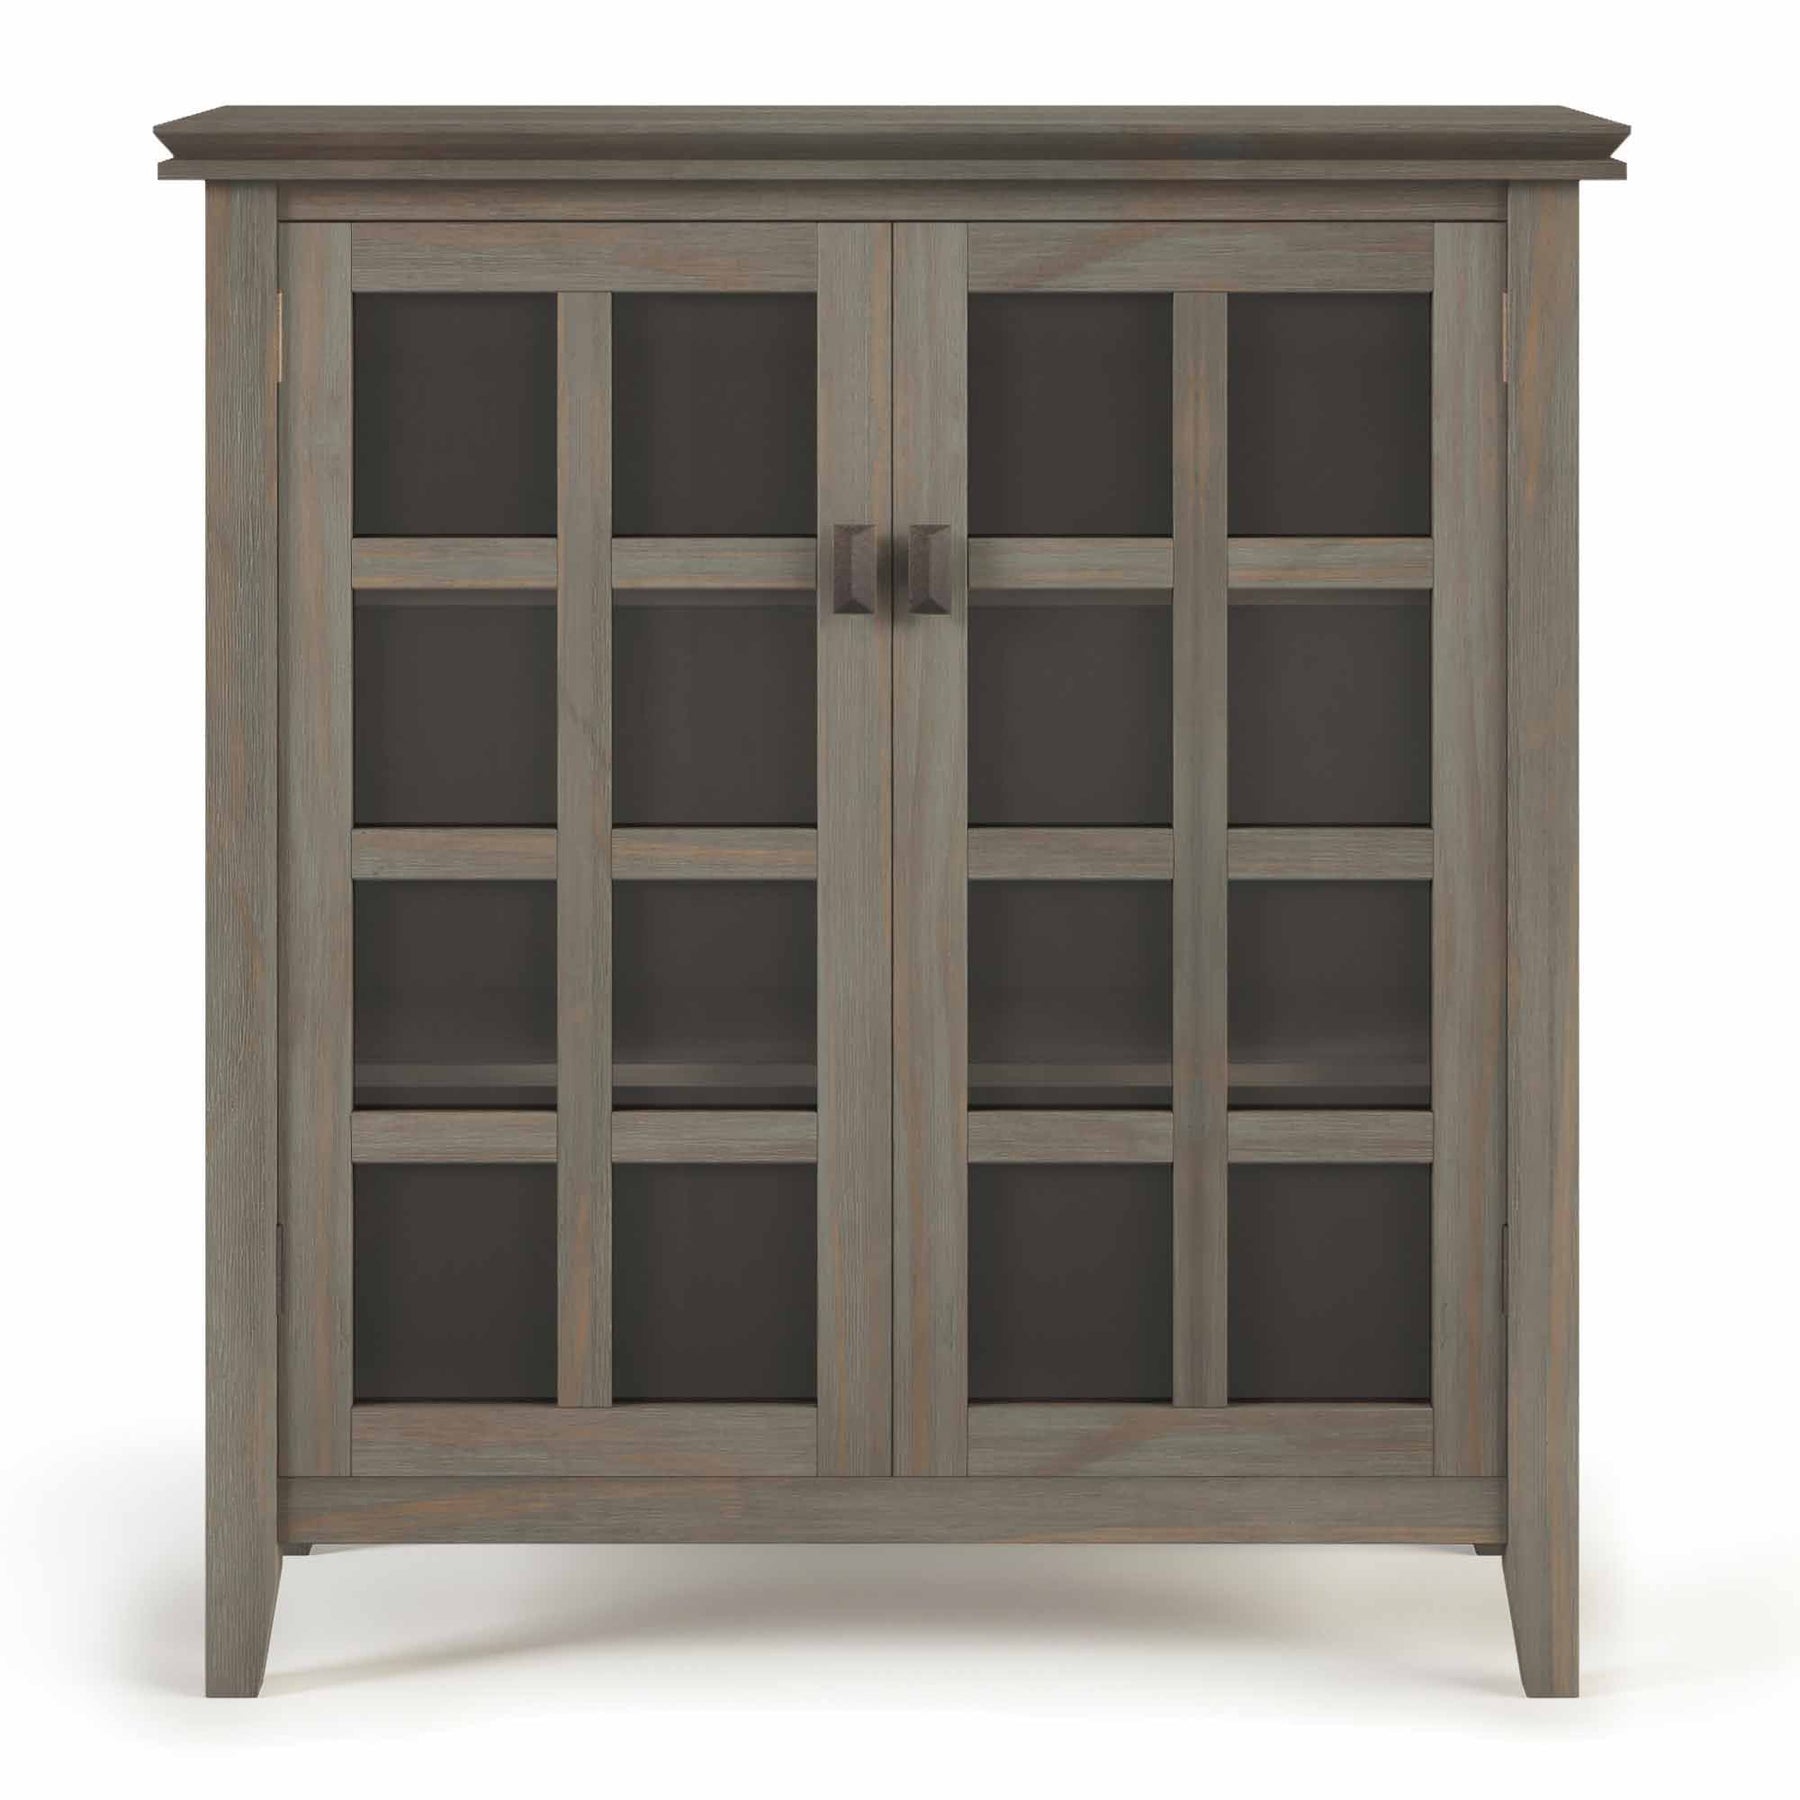 Distressed Grey | Artisan Medium Storage Cabinet